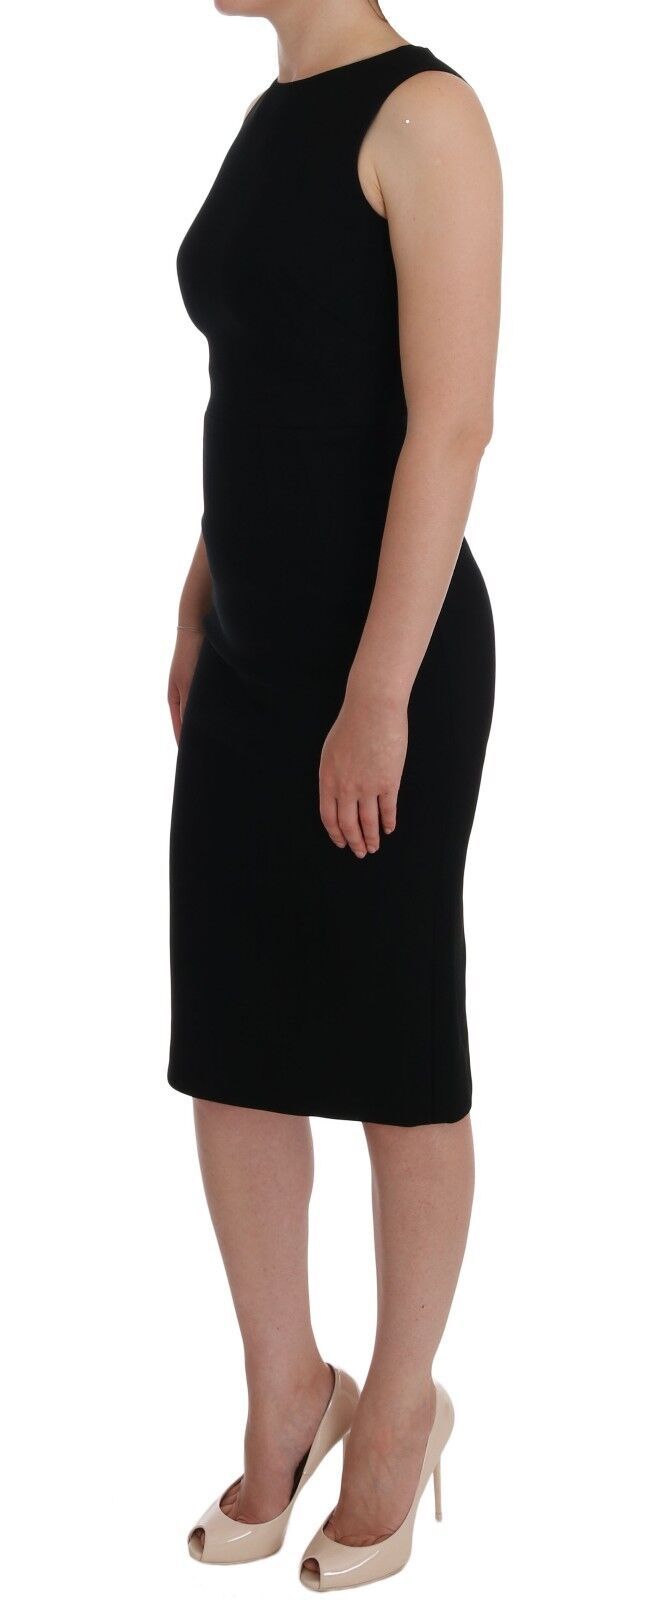 Elegant Crystal Sheath Knee-Length Dress